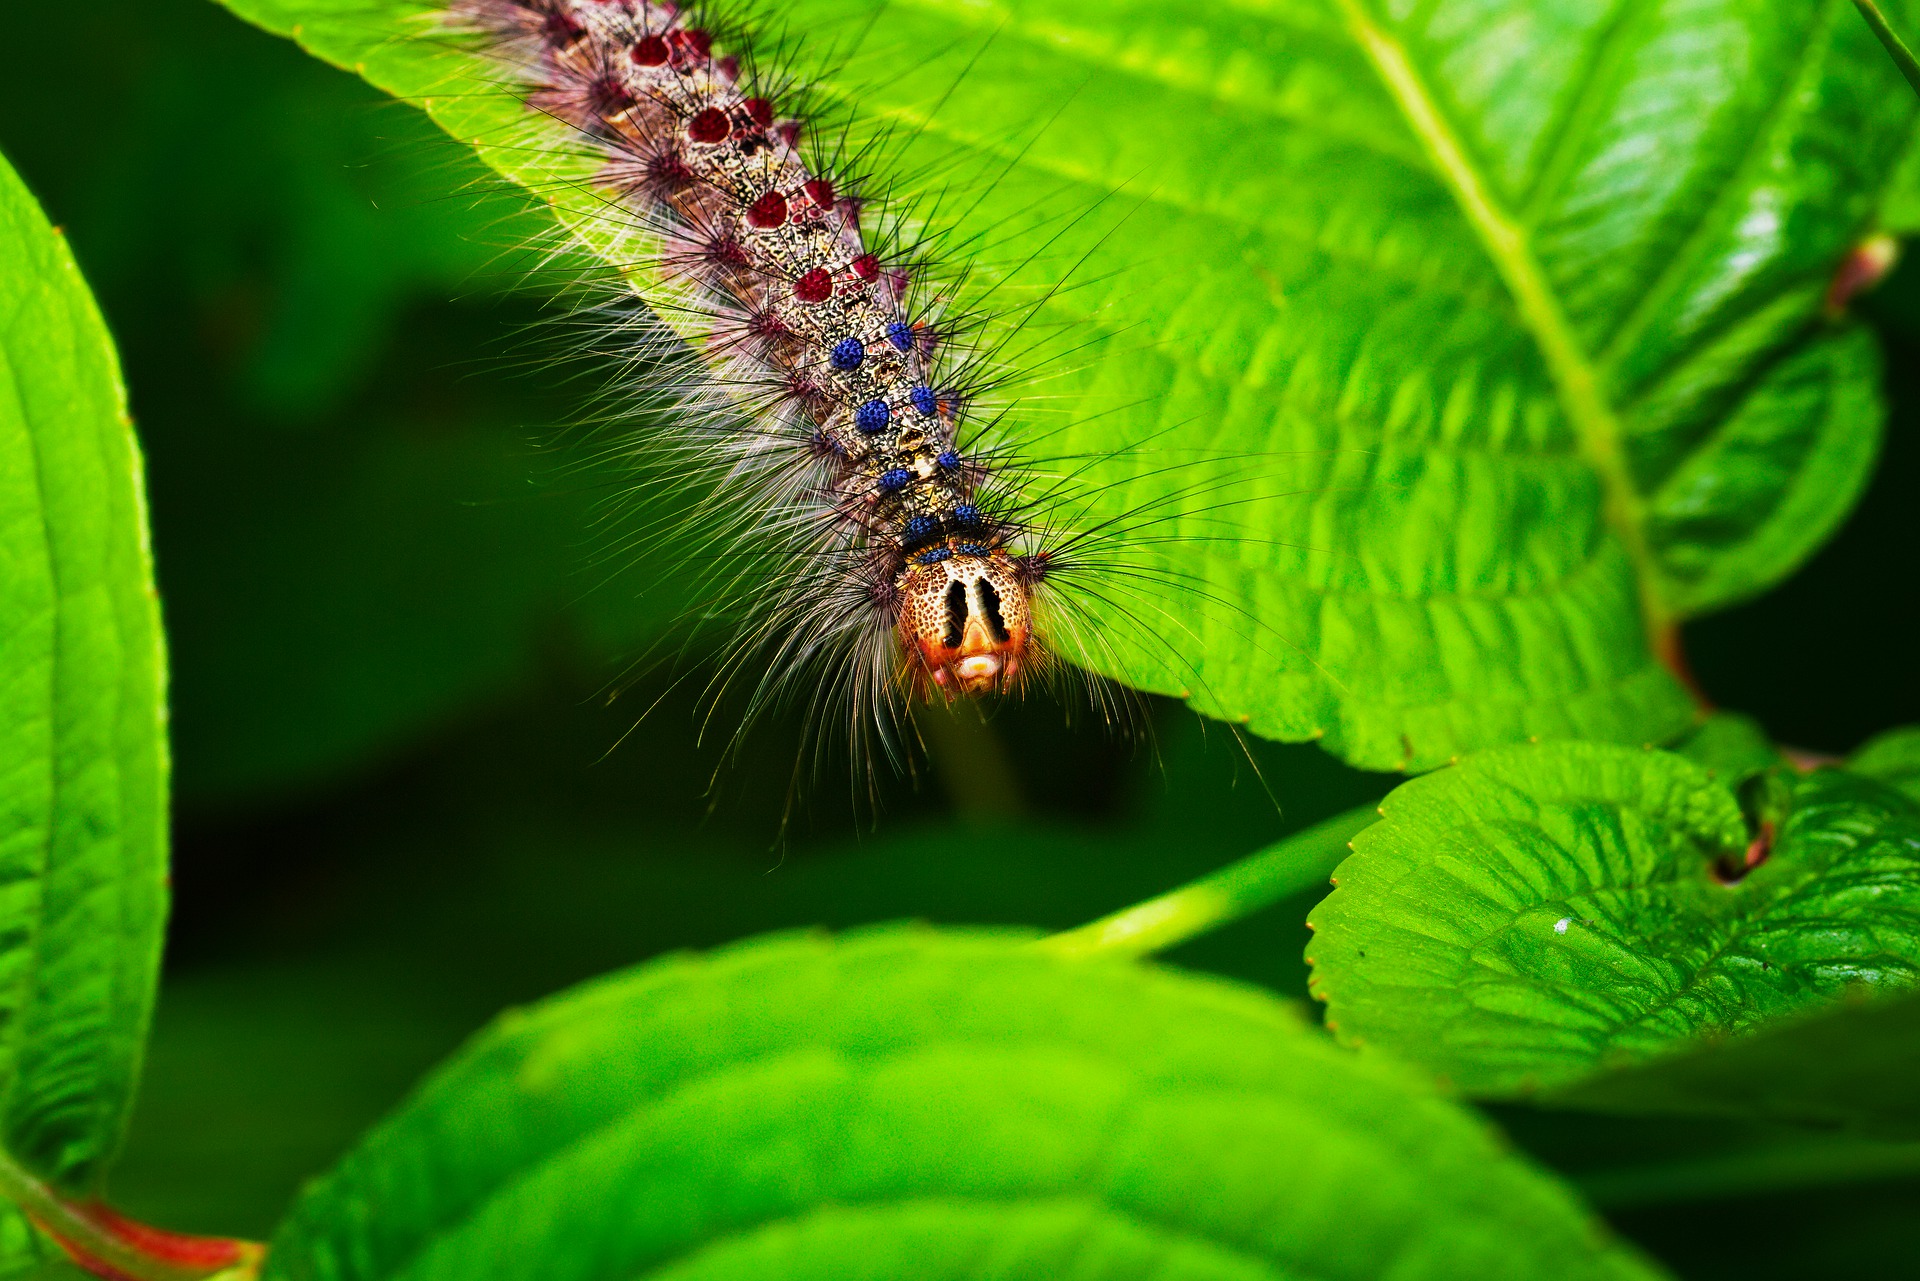 Spongy moth caterpillar.